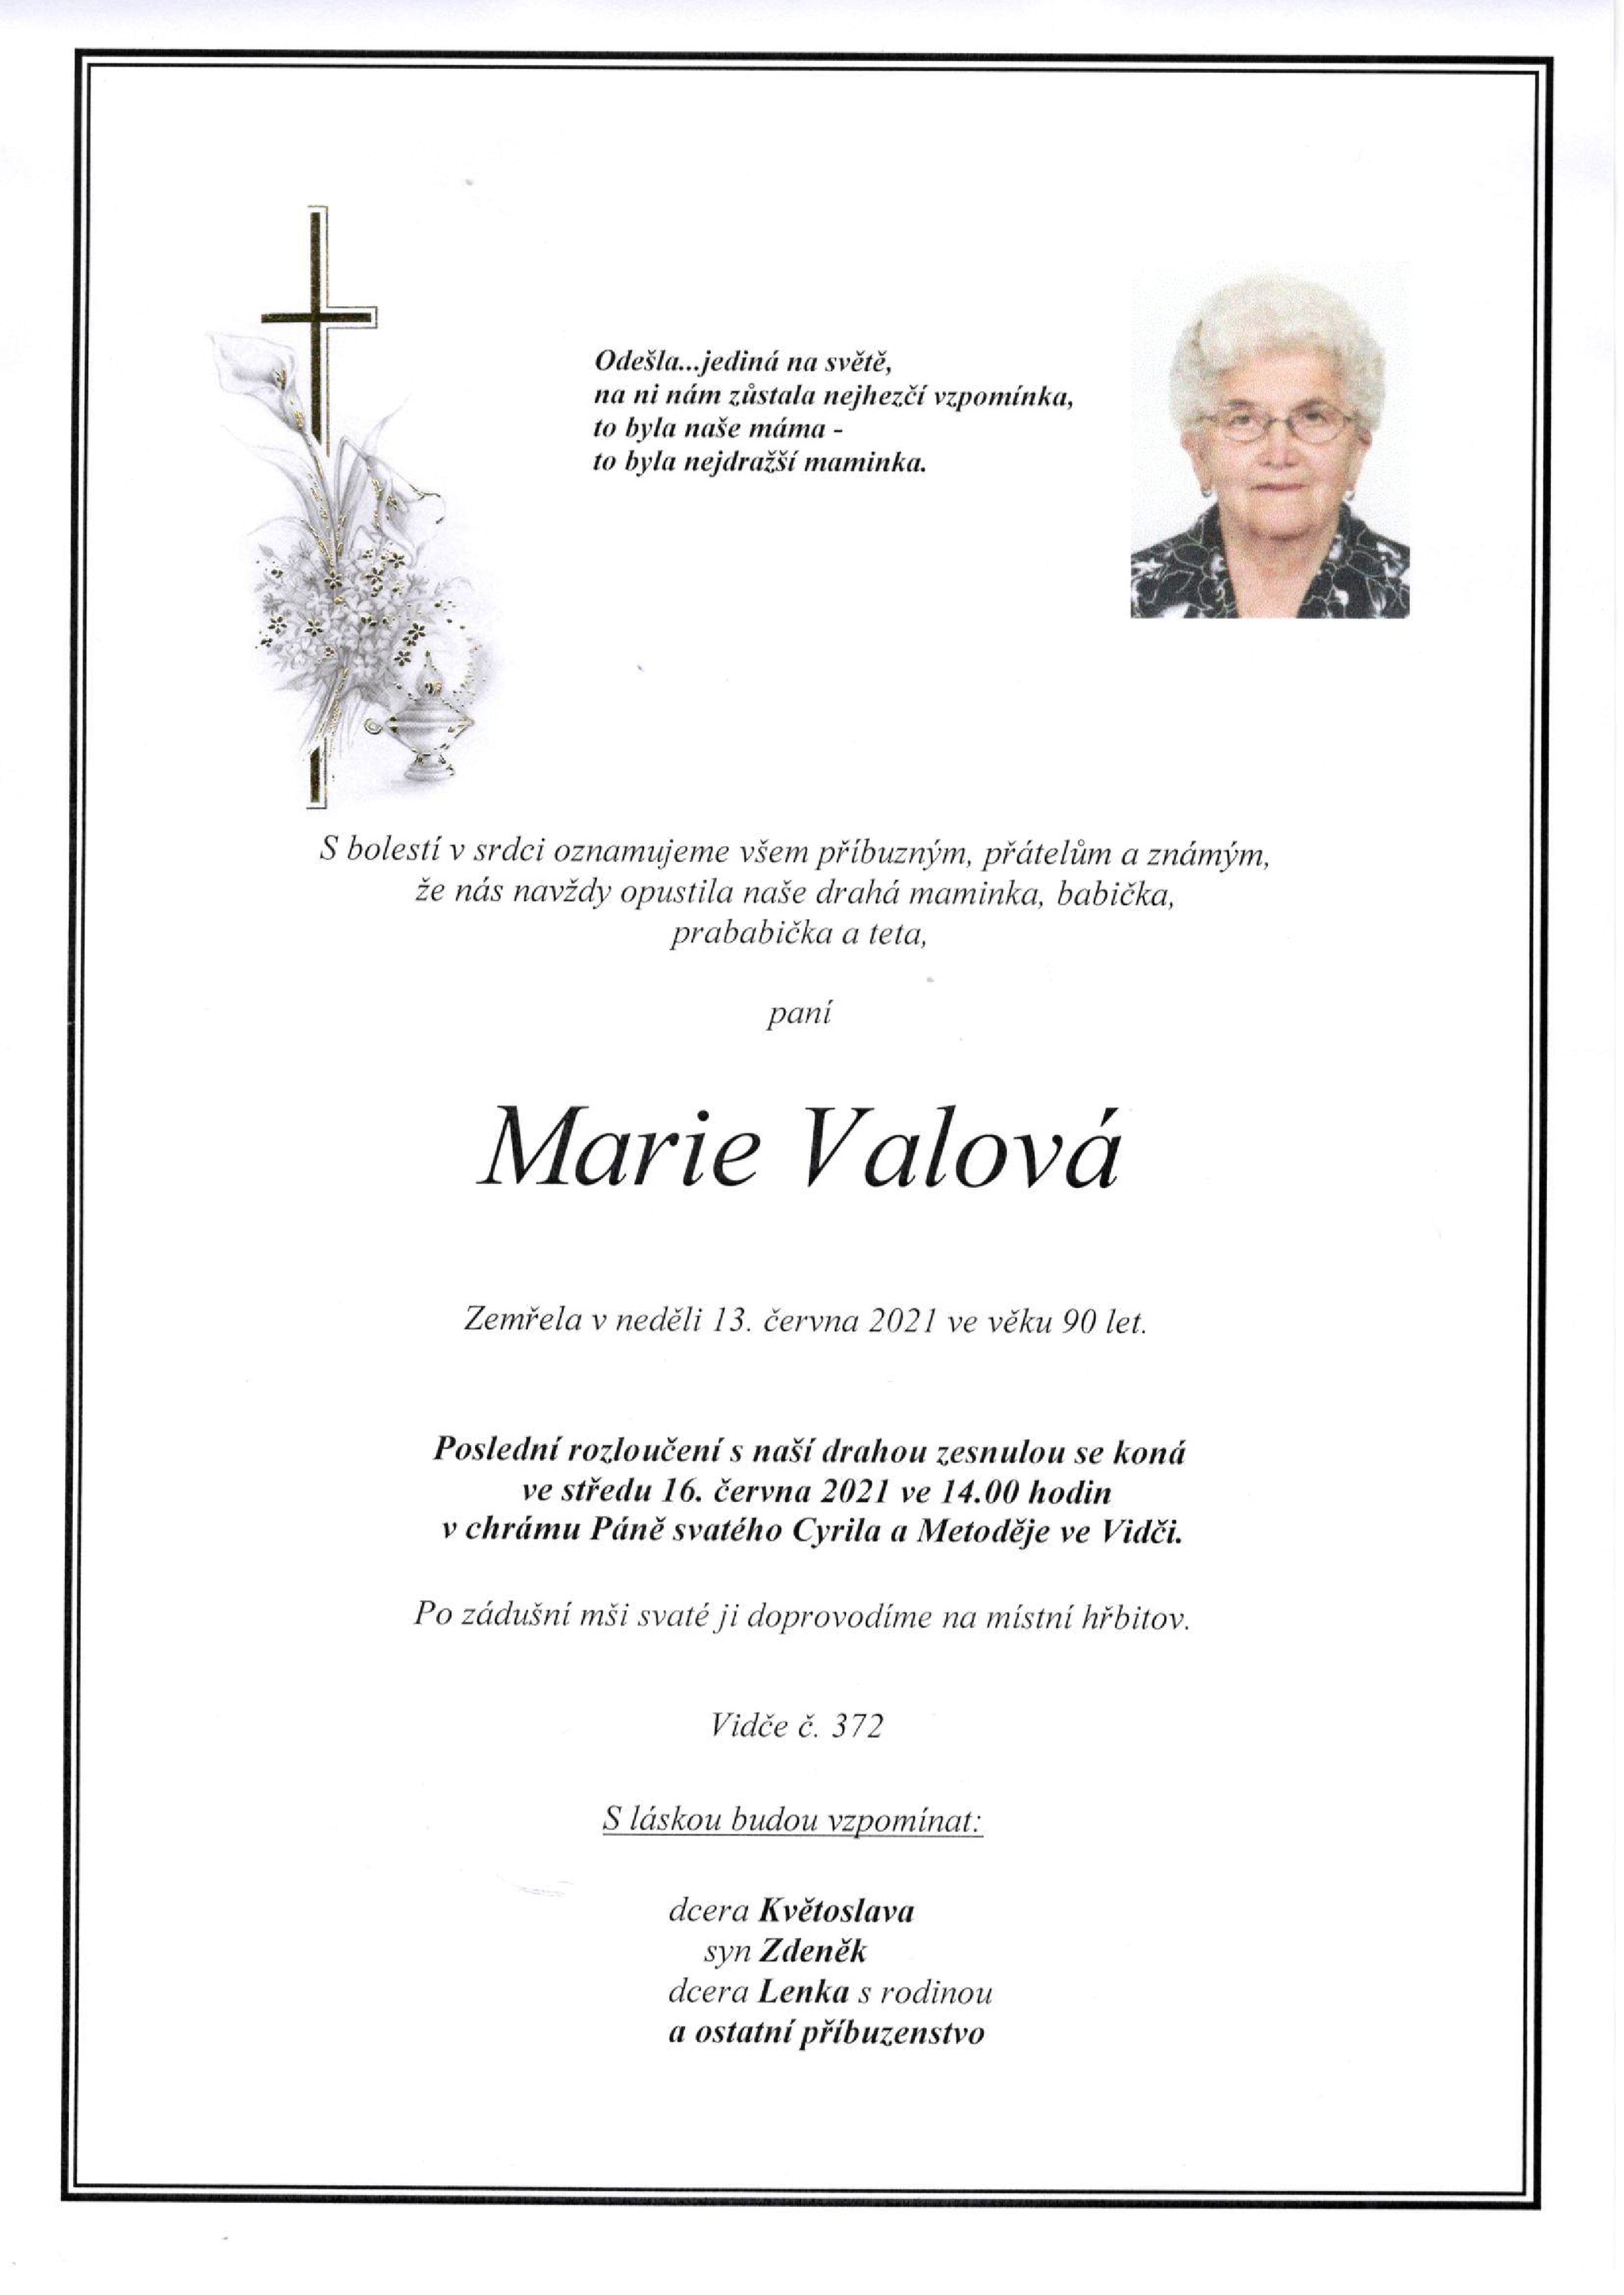 Marie Valová